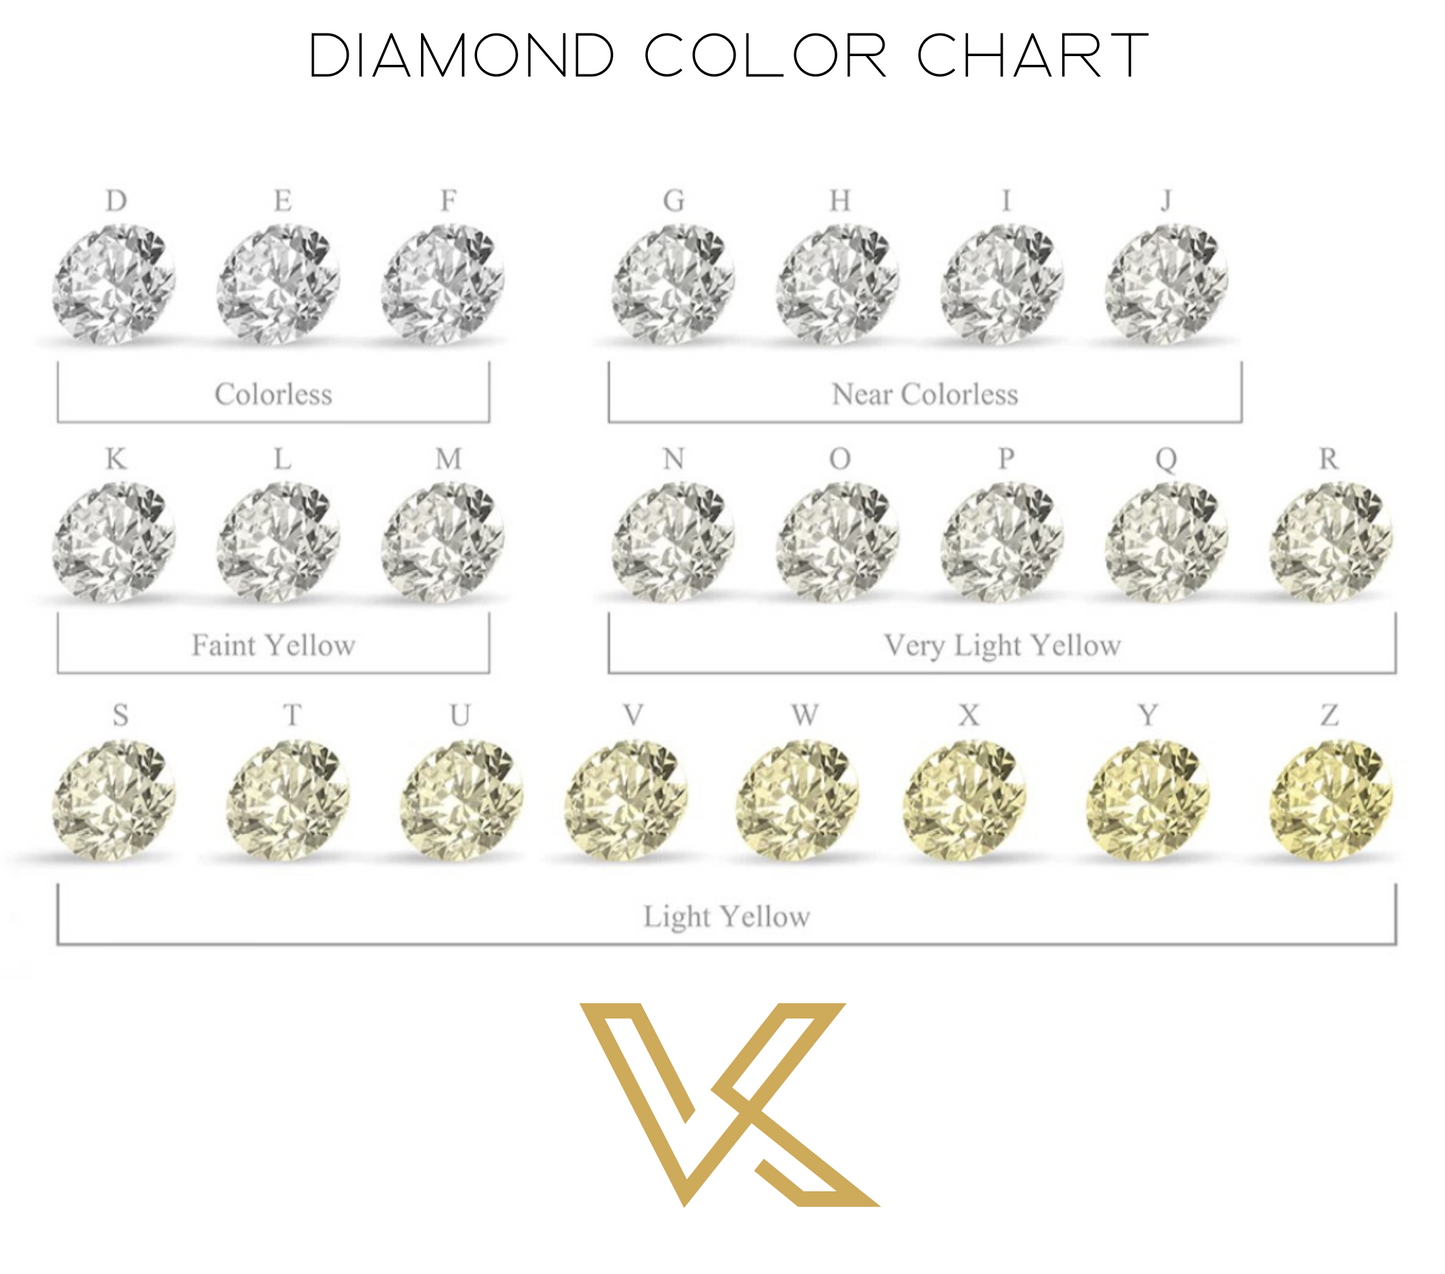 Heart Shape Diamond Earrings. Natural Diamonds. 14K Yellow Gold.